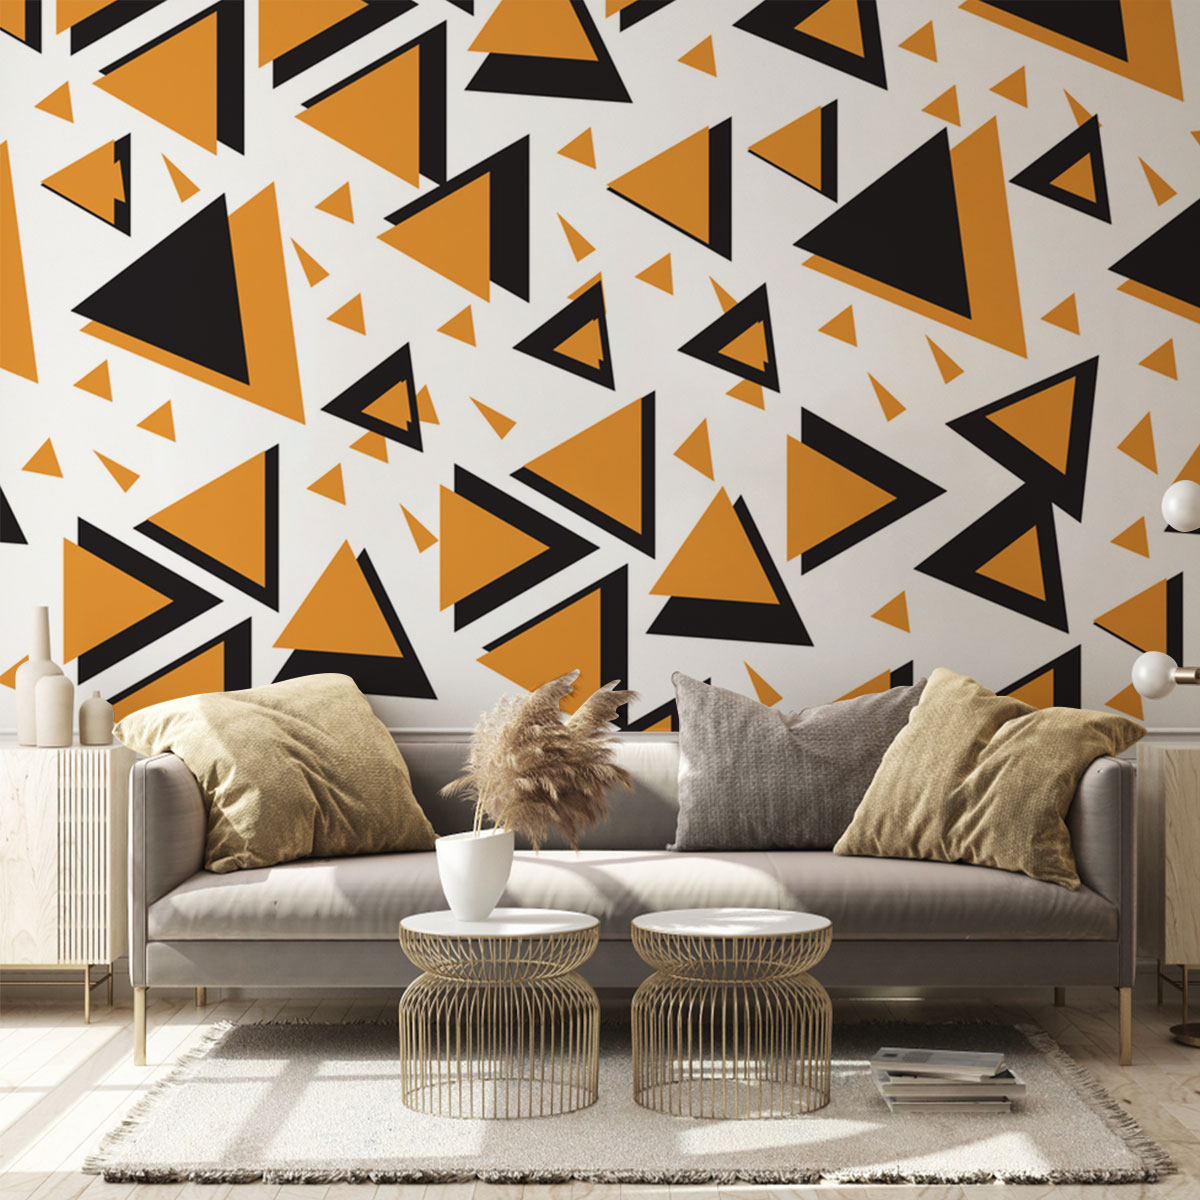 Black Orange Minimalist With Geometric Shapes Wall Mural